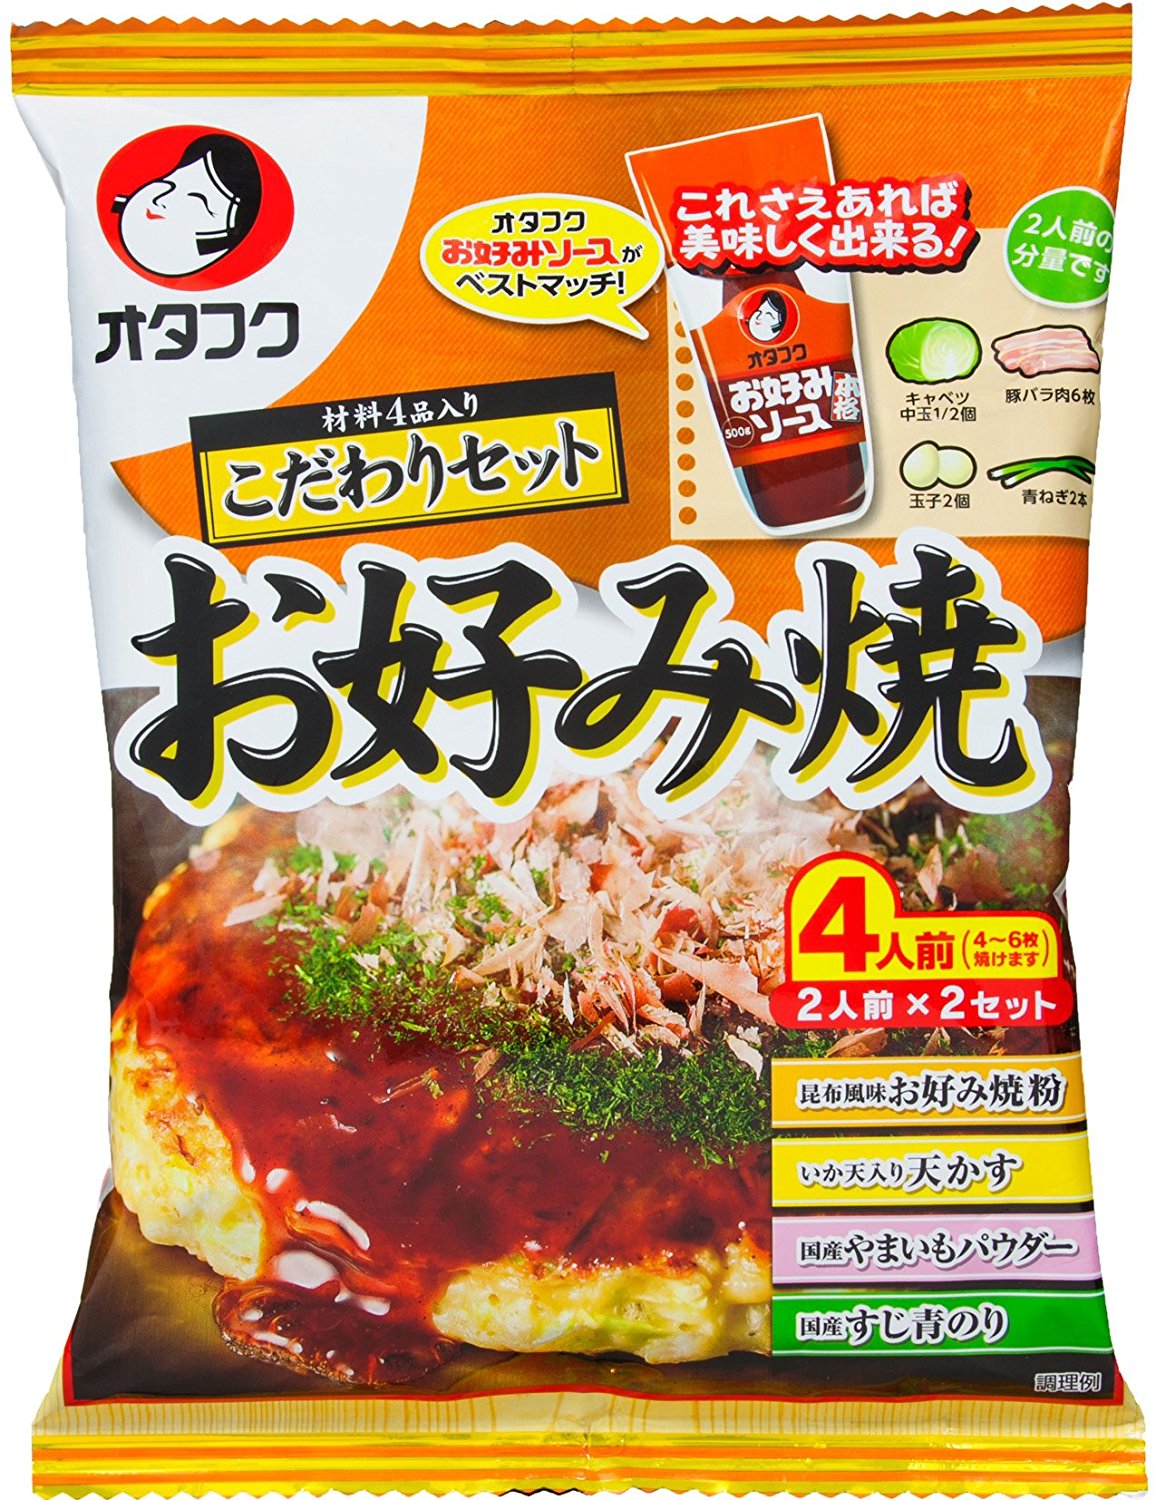 Otafuku Japanese Okonomiyaki Kit 4 Servings by Japanese Taste